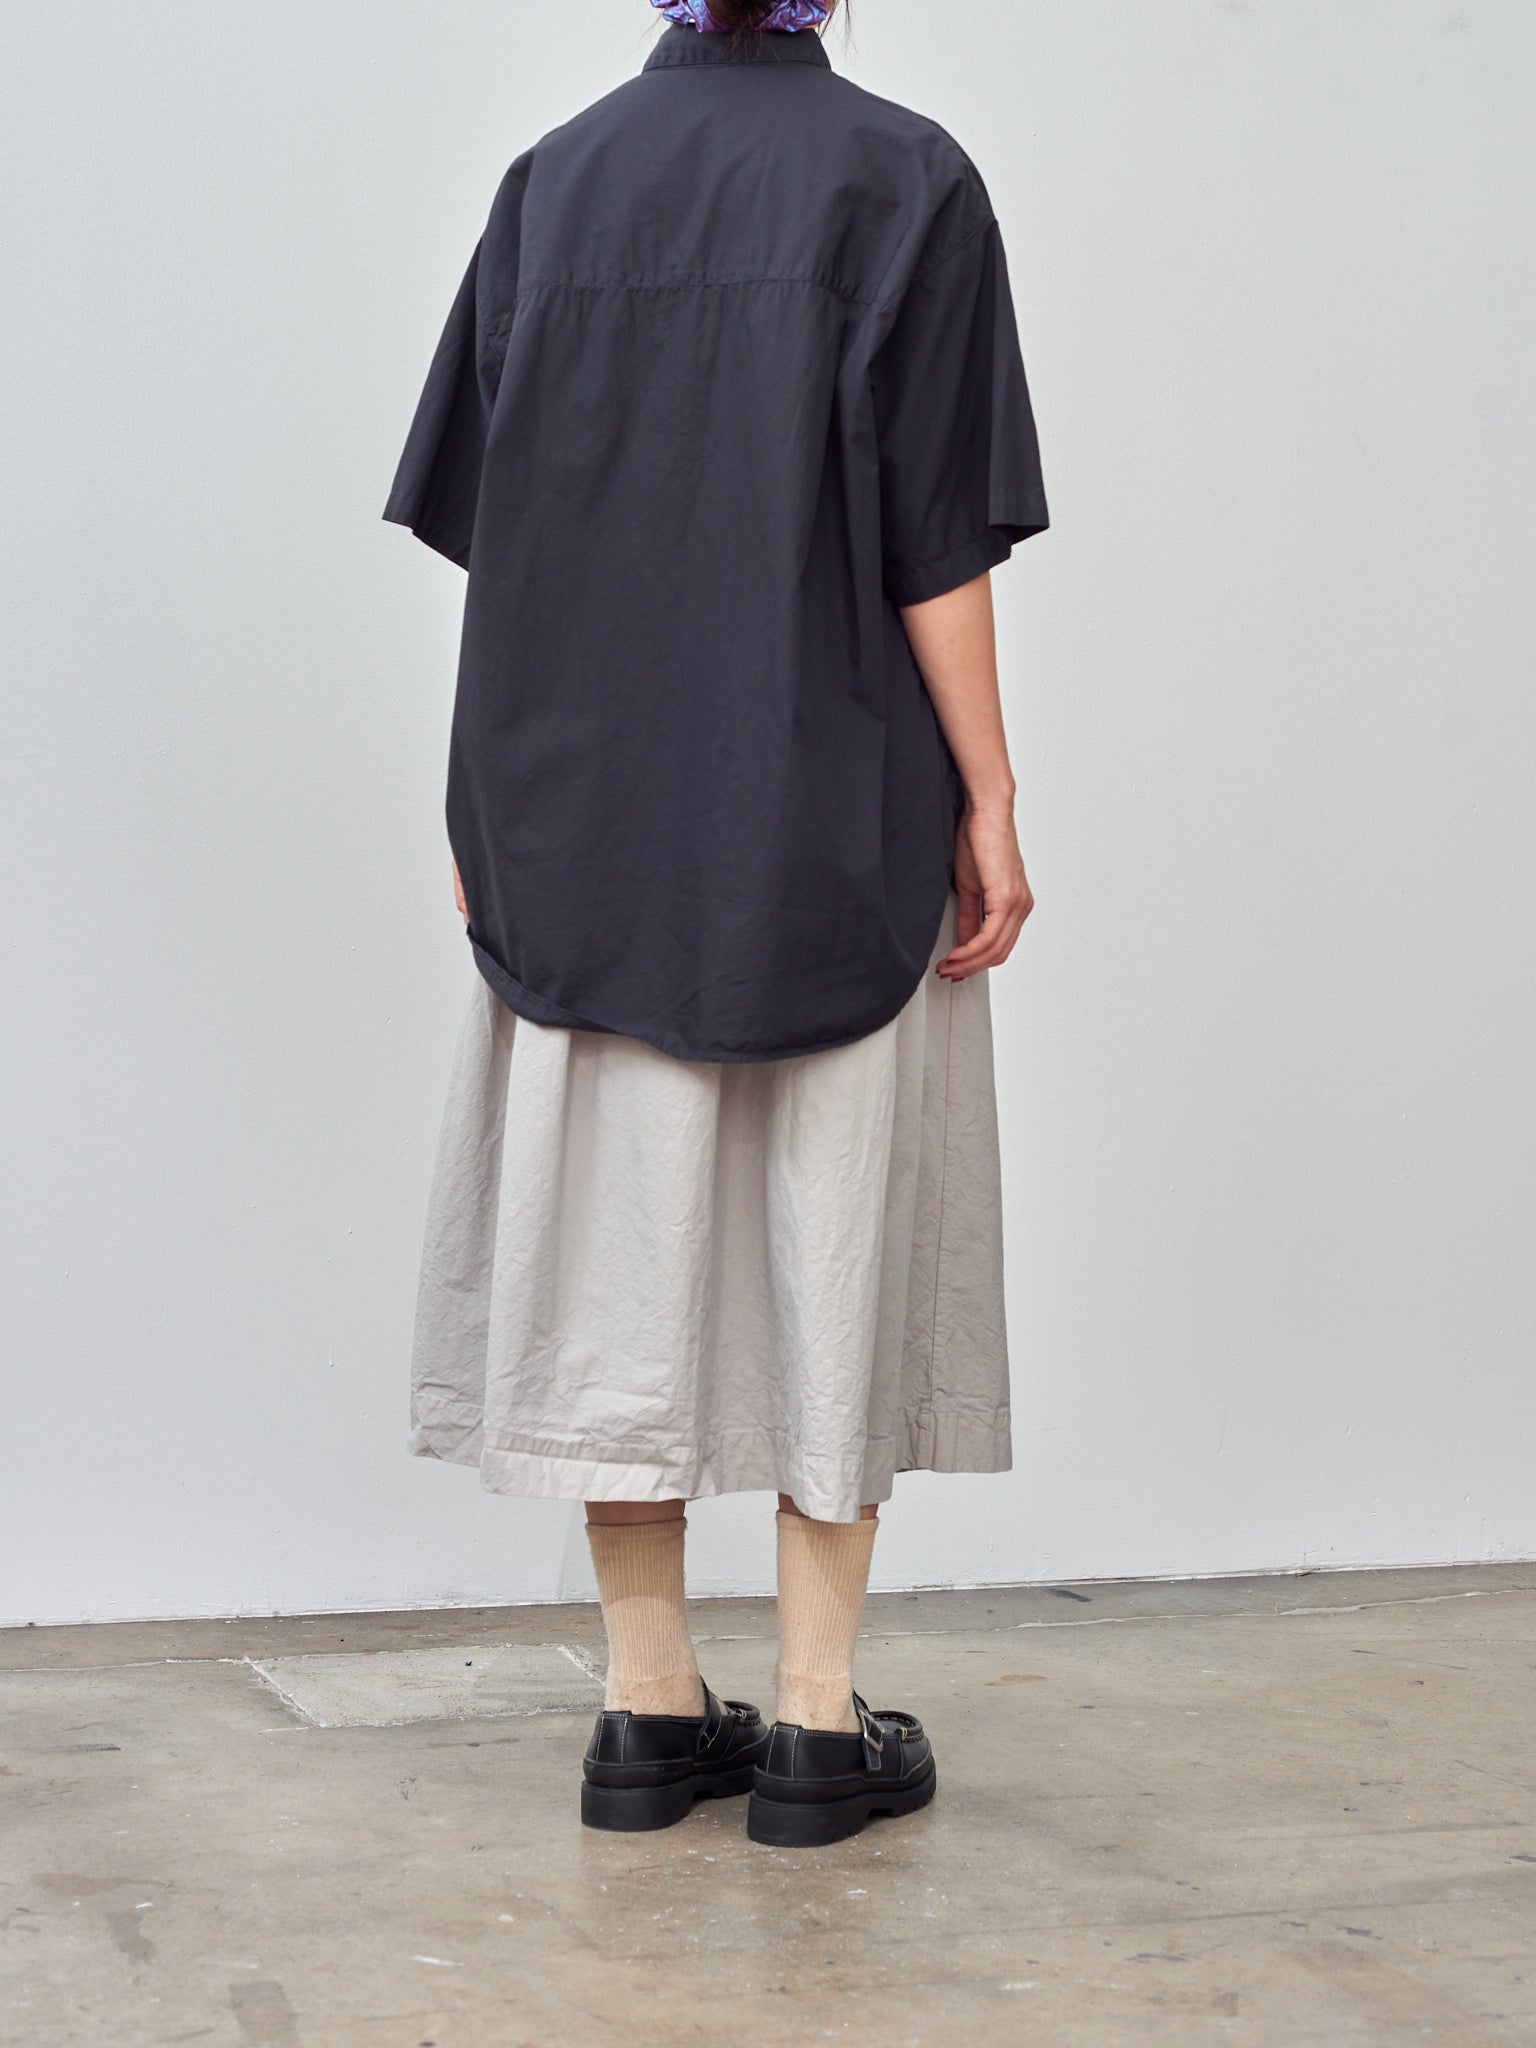 Namu Shop - Veritecoeur Half Sleeve Big Shirt - Charcoal